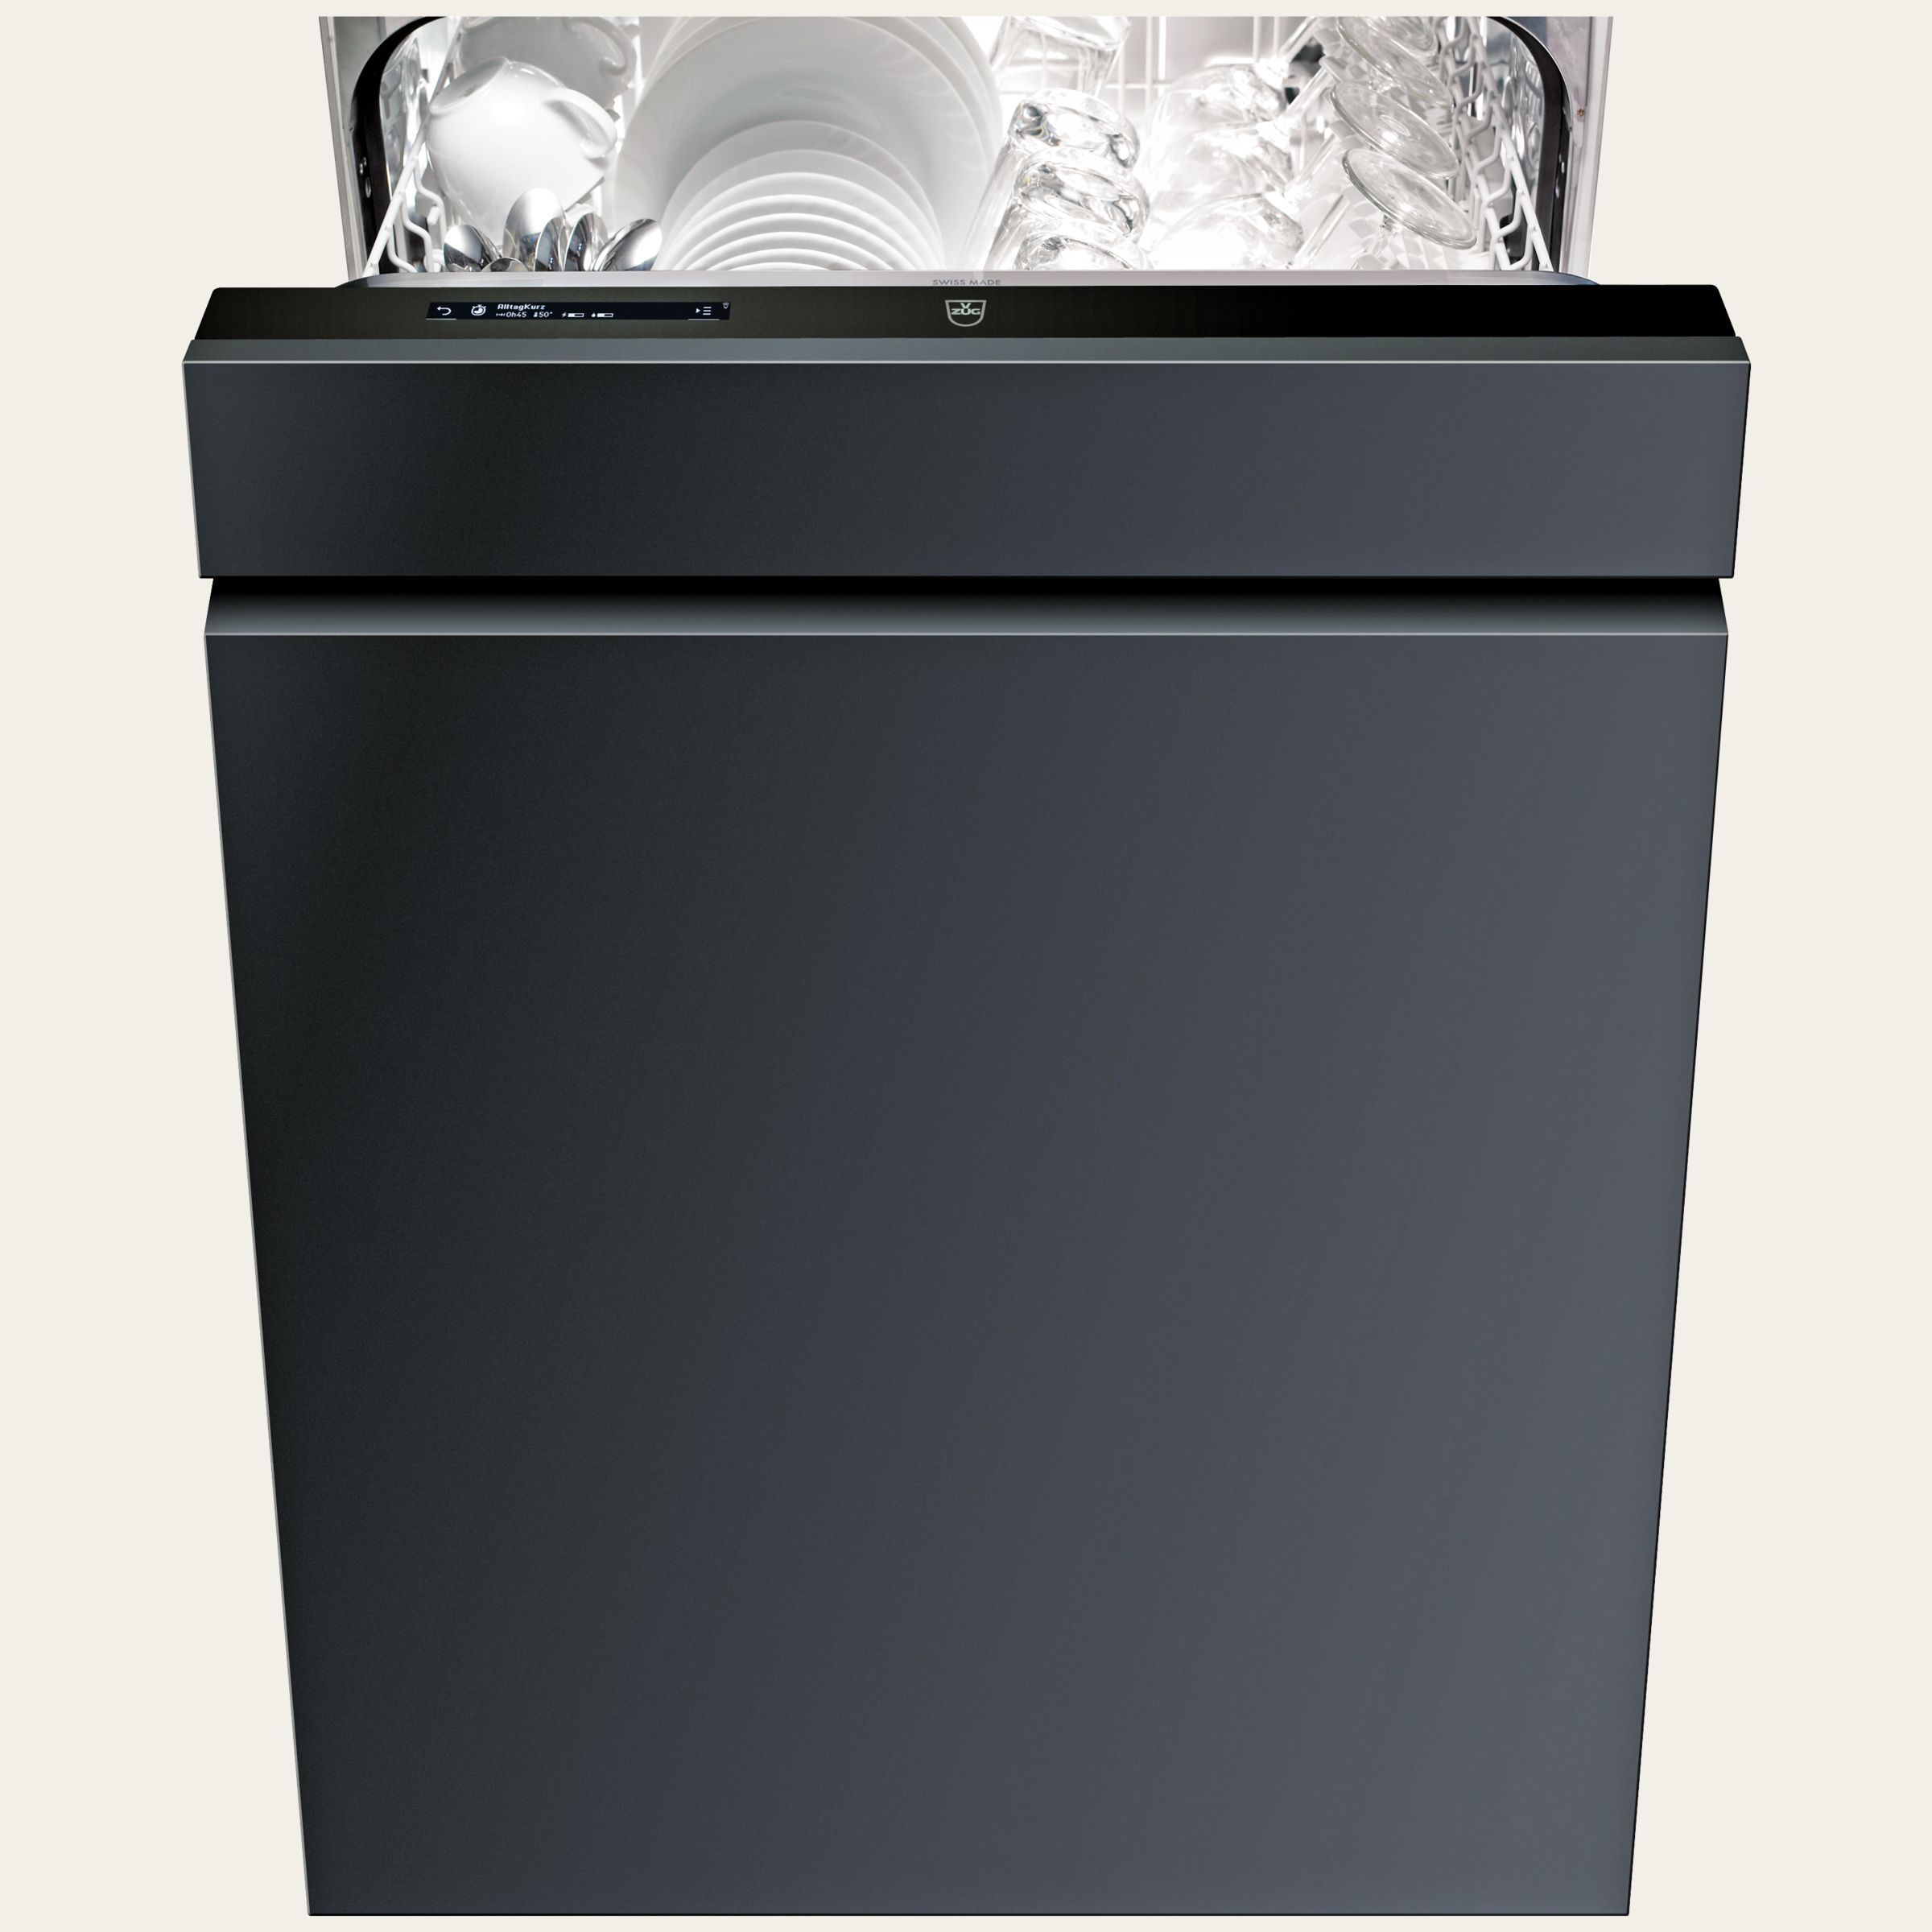 V-ZUG Dishwasher AdoraDish V6000, Standard width: 60cm, Fully integratable, Large capacity, V-ZUG-Home, LCD